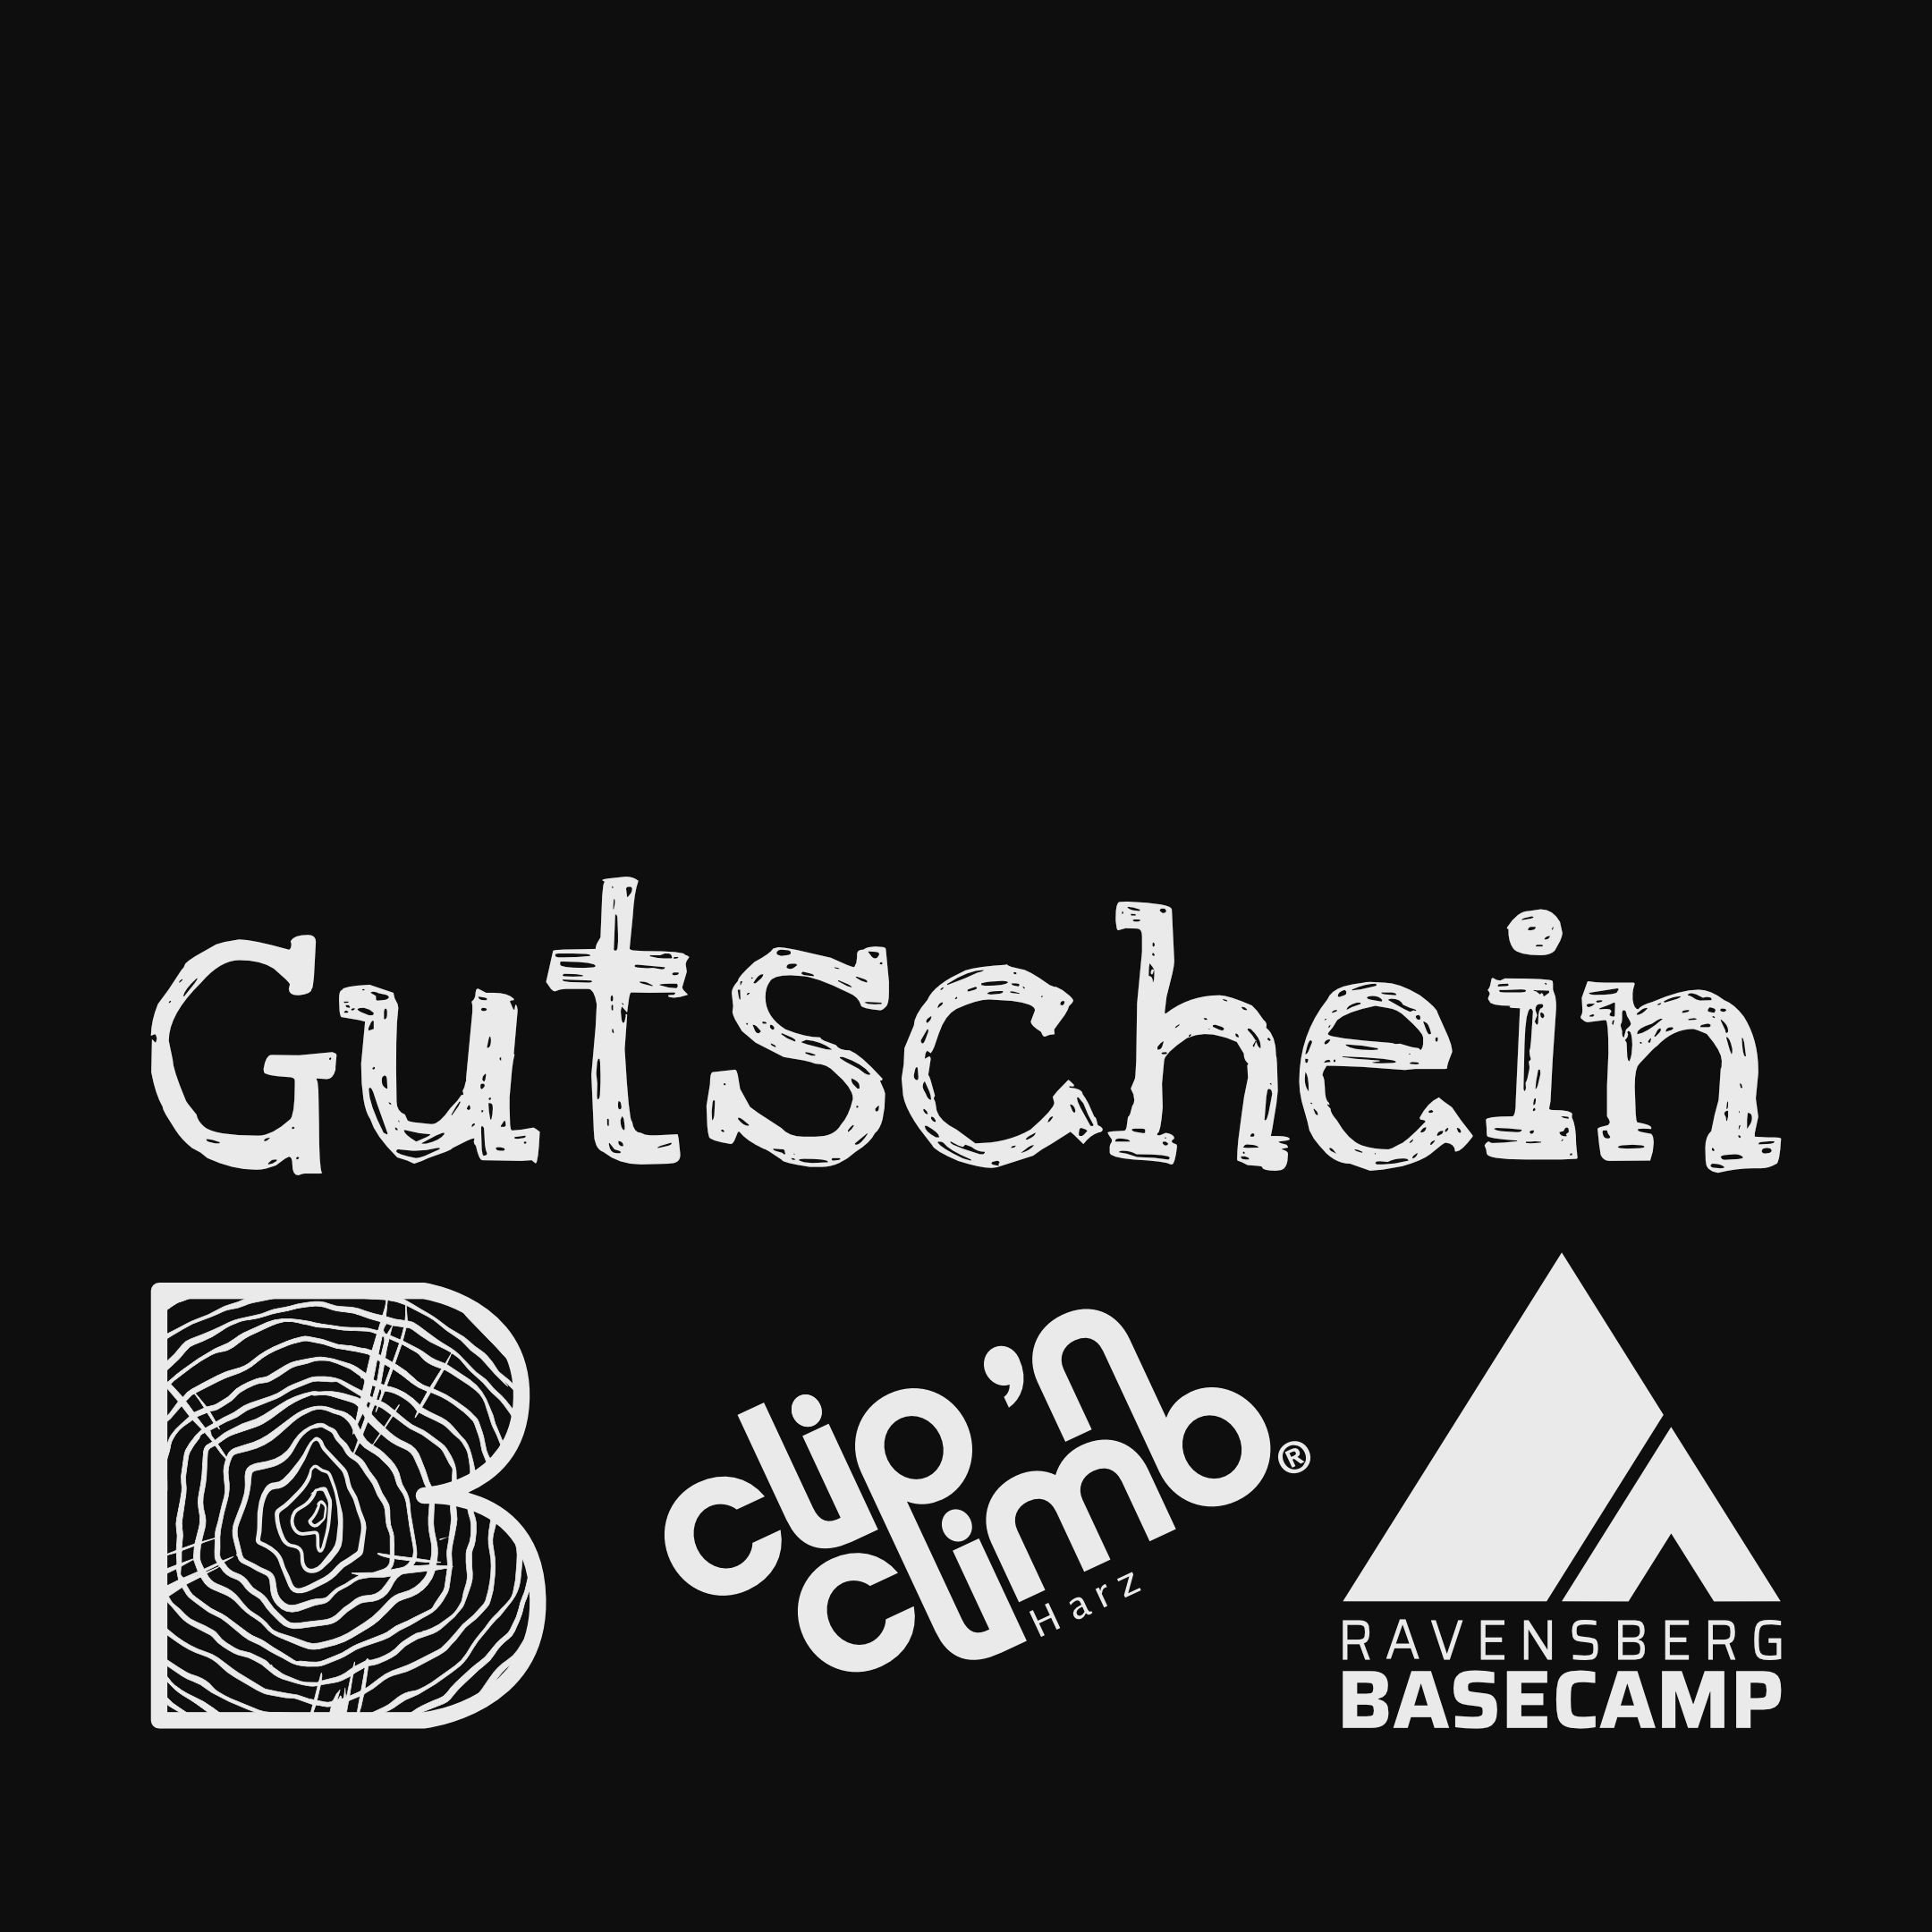 Ravensberg Basecamp